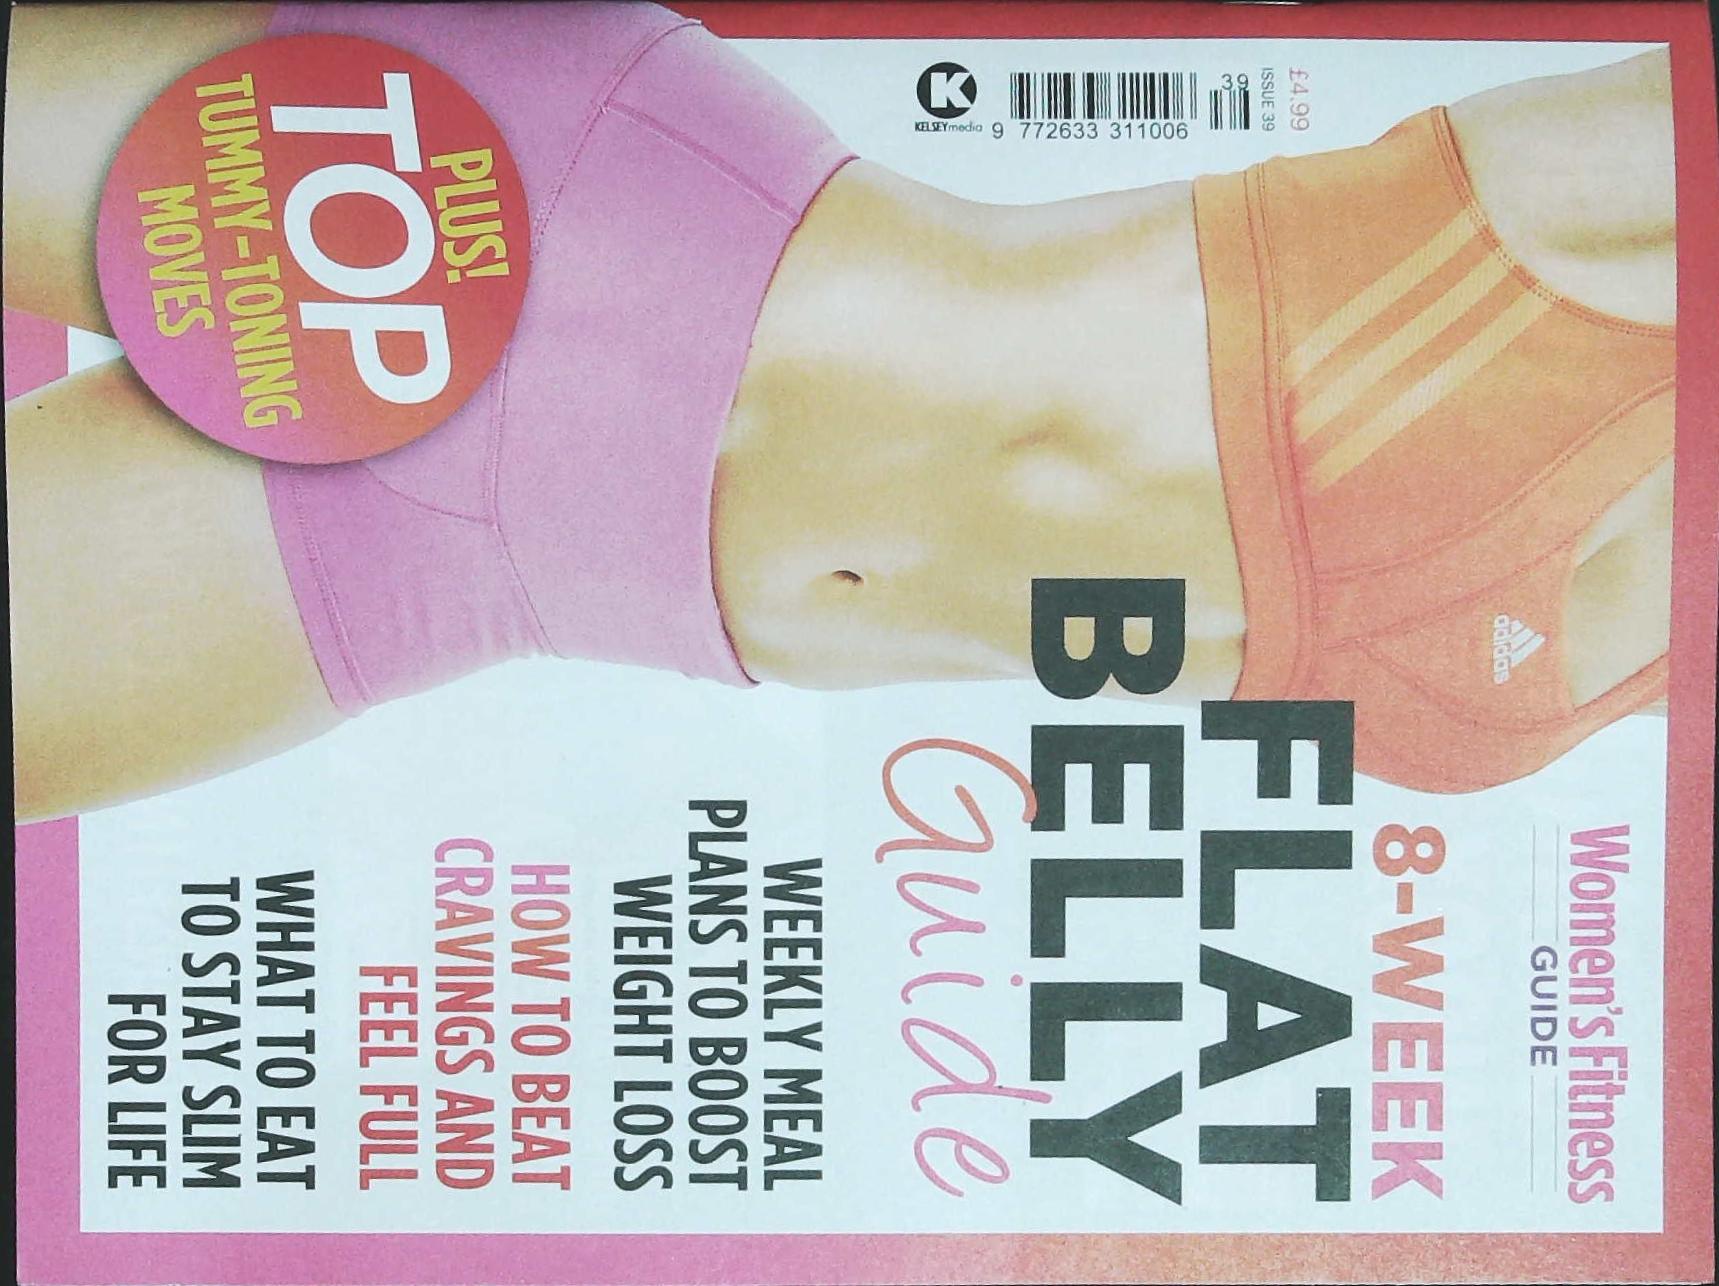 https://management.magazinesupermarket.co.uk/images/covers/9c429060-0aca-46e3-881b-c9583289c967_womens-fitness-guide.jpg?auto=compress,enhance,format